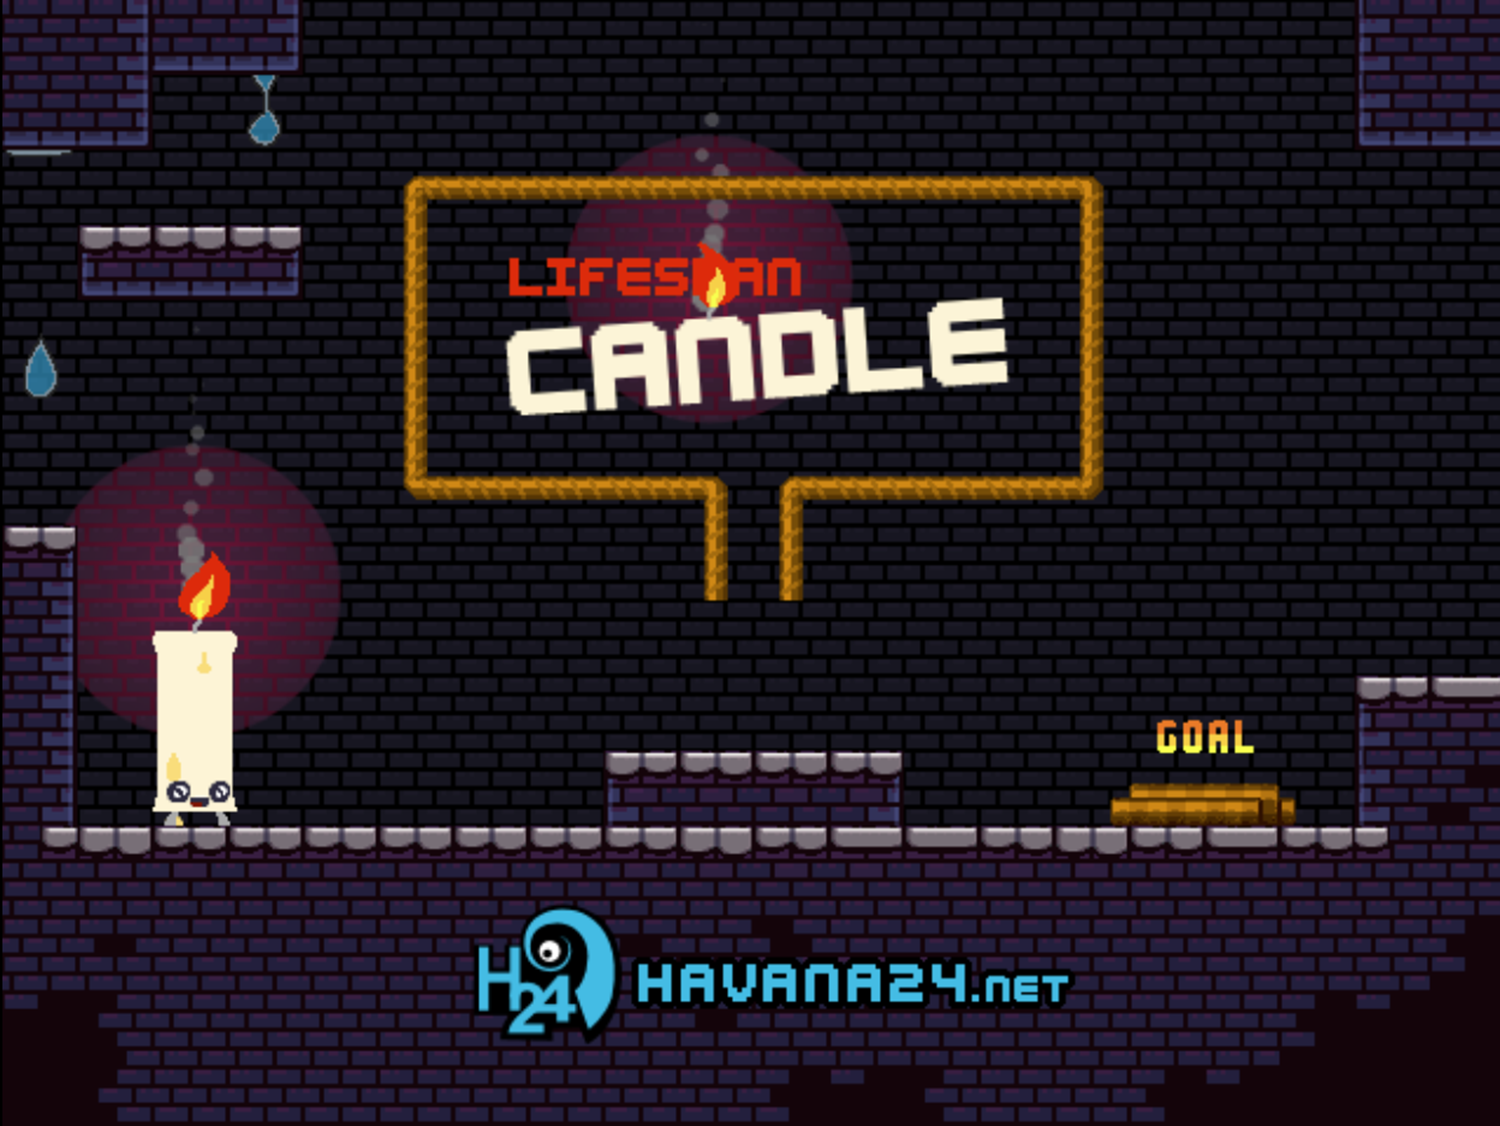 Lifespan Candle Game Welcome Screen Screenshot.